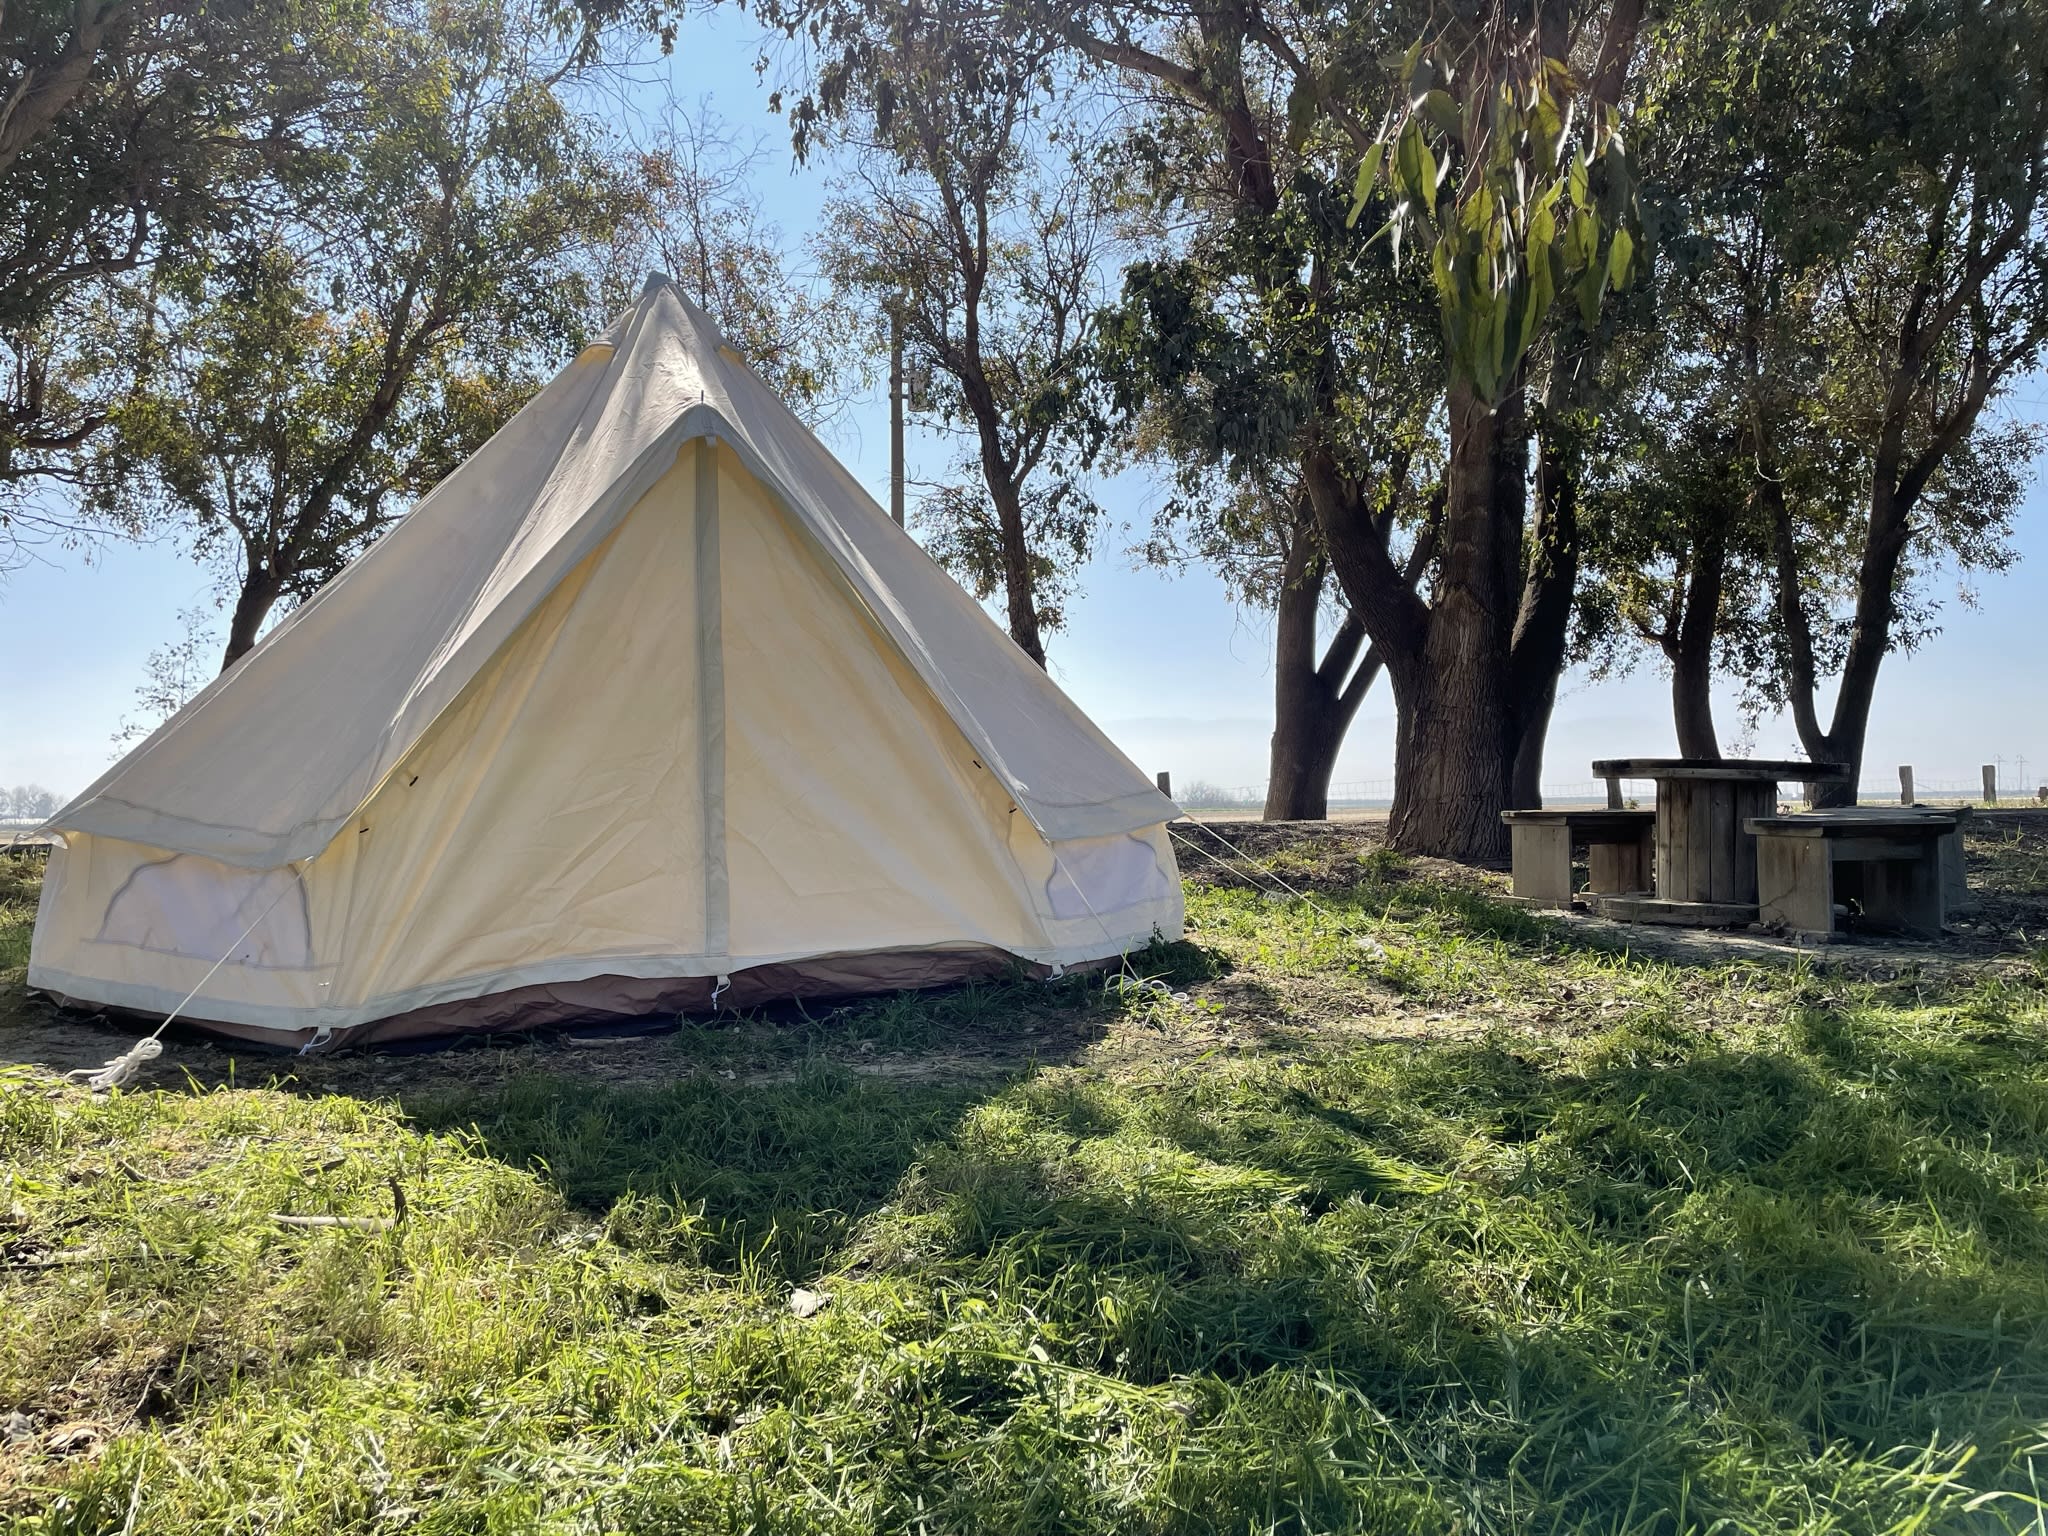 Campsite includes canvas tent, picnic area, fire pit, potable water spigot and trash can